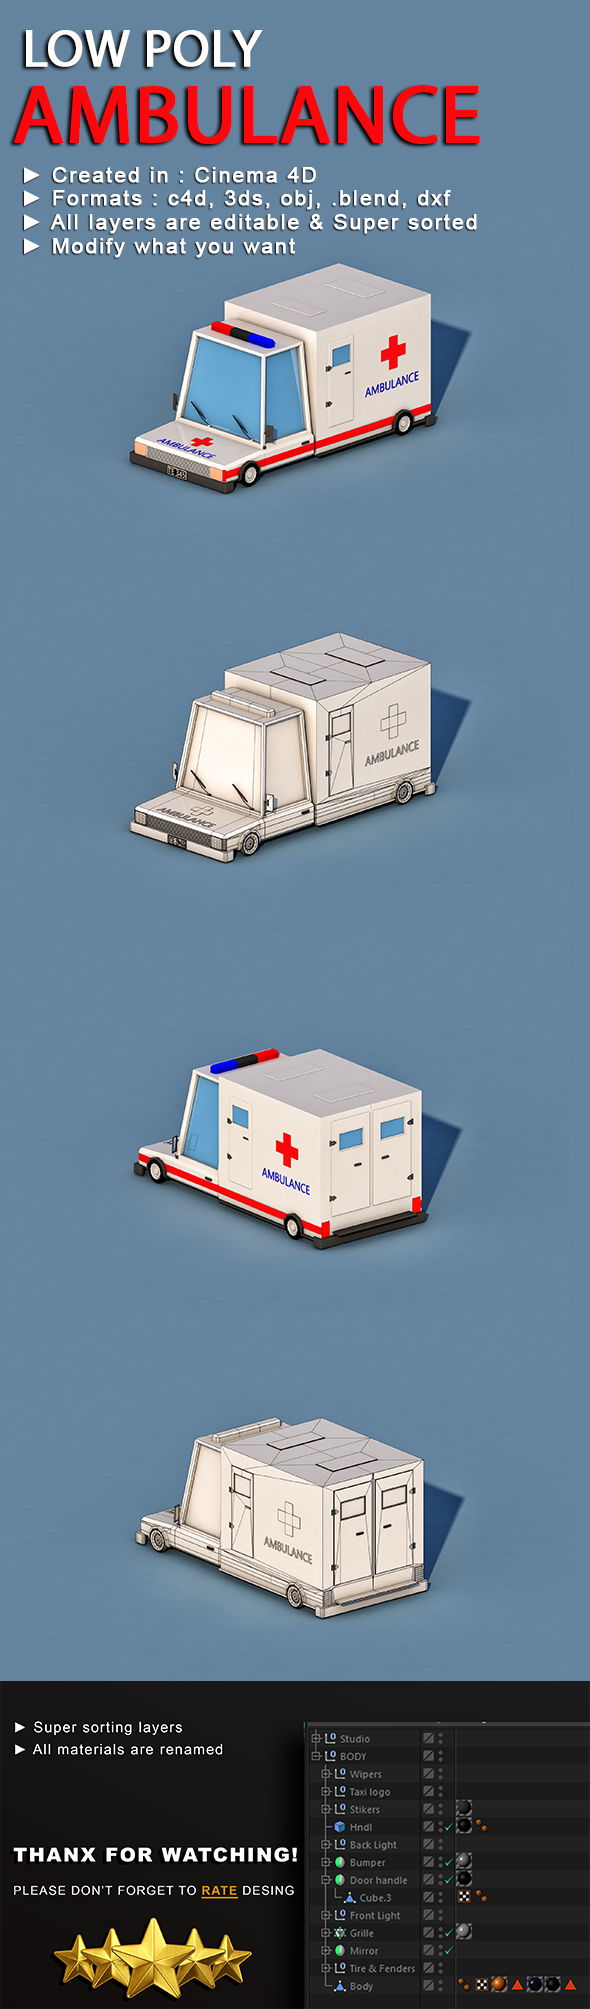 Cartoon Ambulance - 3Docean 22935779